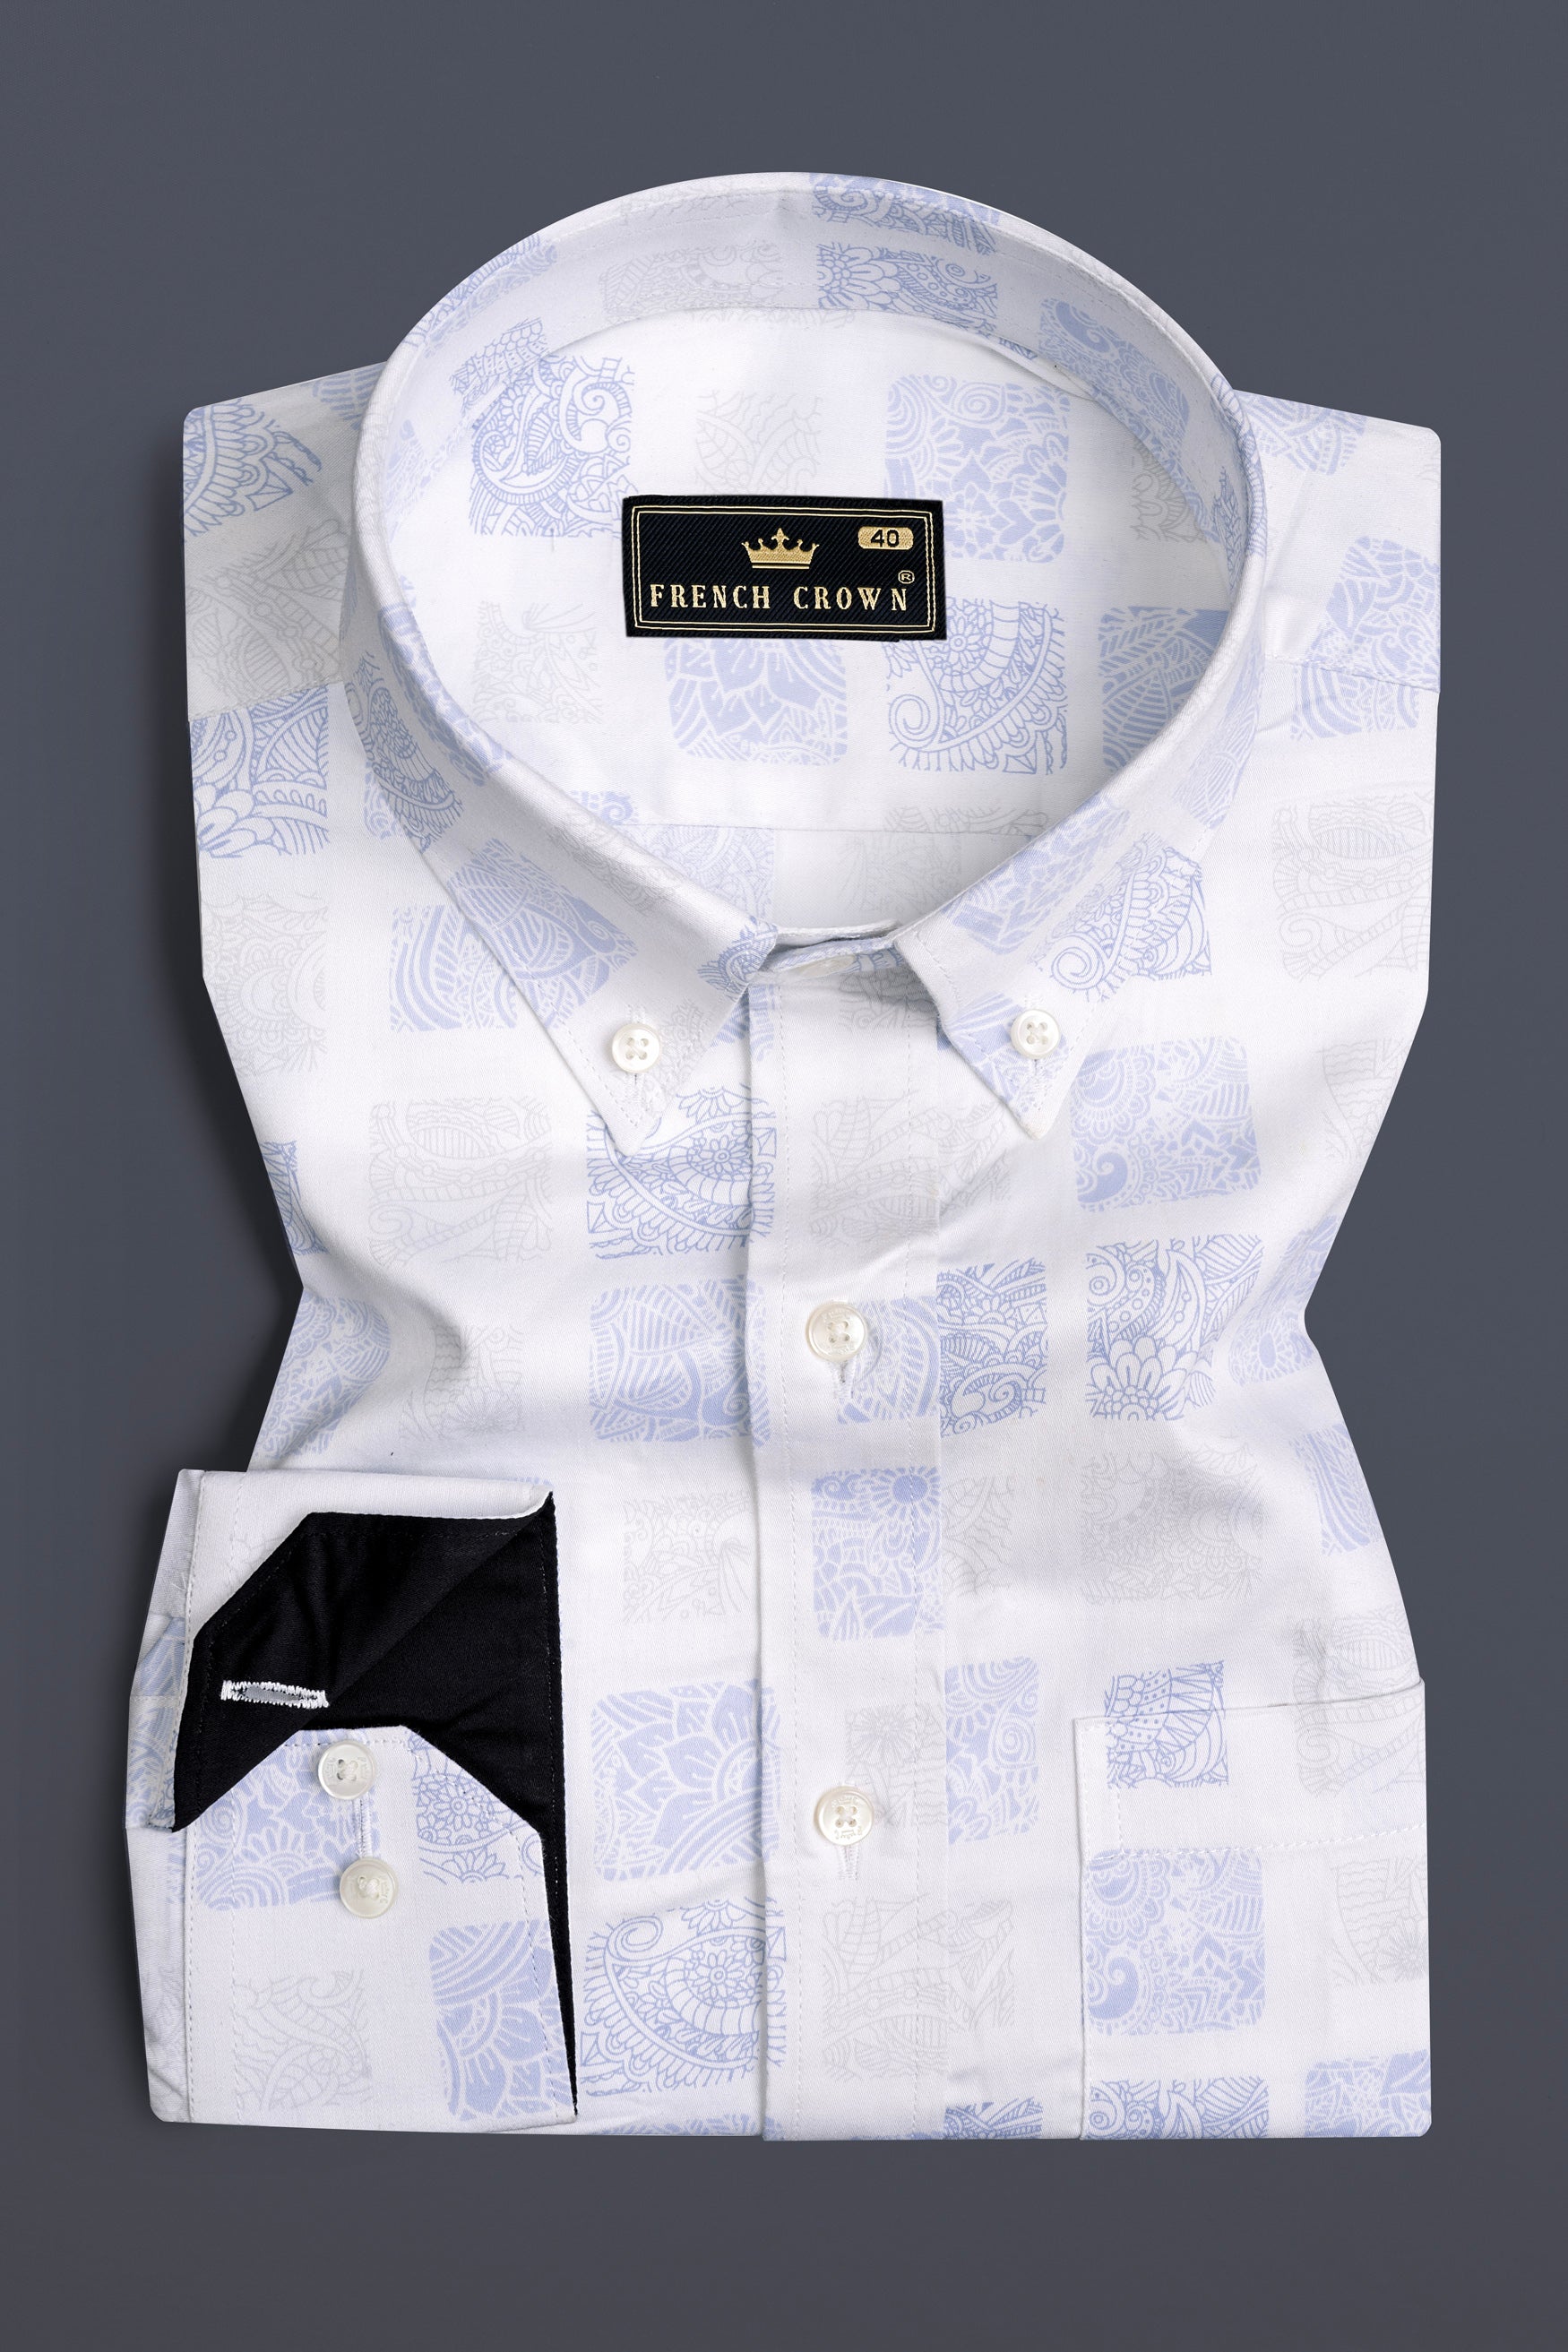 Platinum Gray and Waterloo Blue Printed Super Soft Premium Cotton Shirt